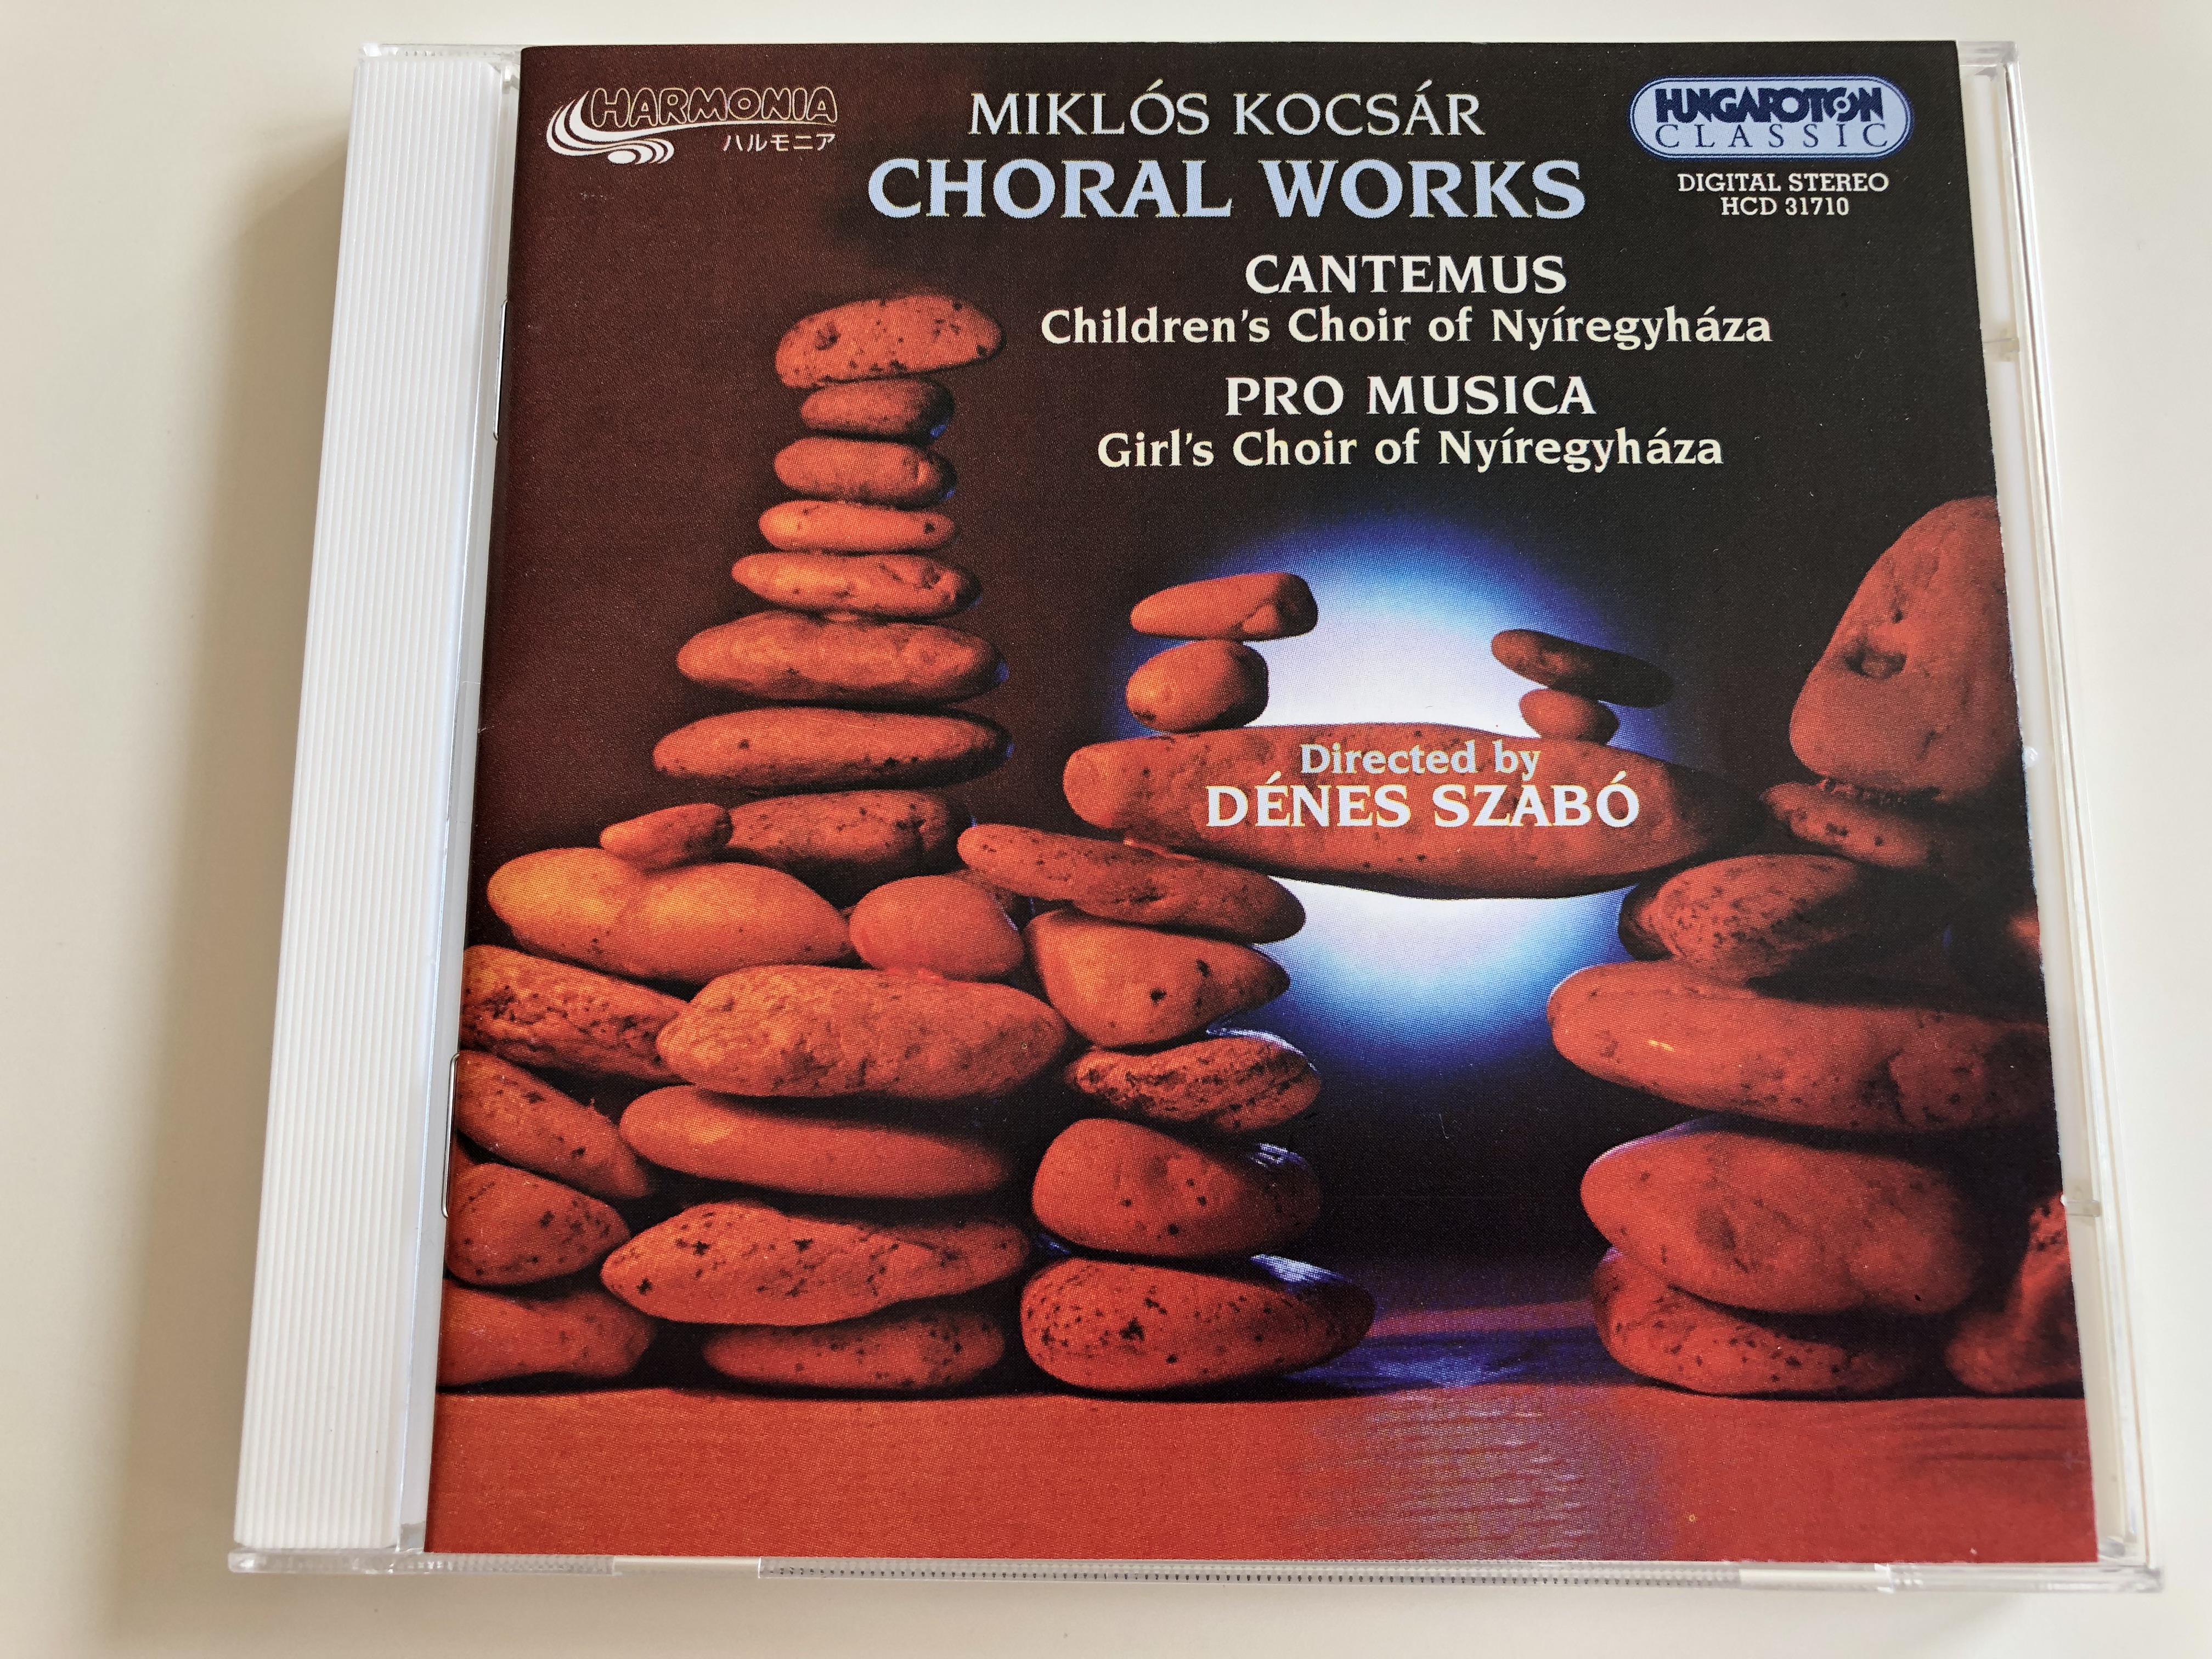 choral-works-mikl-s-kocs-r-cantemus-childrens-choir-of-ny-regyh-za-pro-musica-girls-choir-of-ny-regyh-za-directed-by-d-nes-szab-hungaroton-classic-audio-cd-1997-1-.jpg